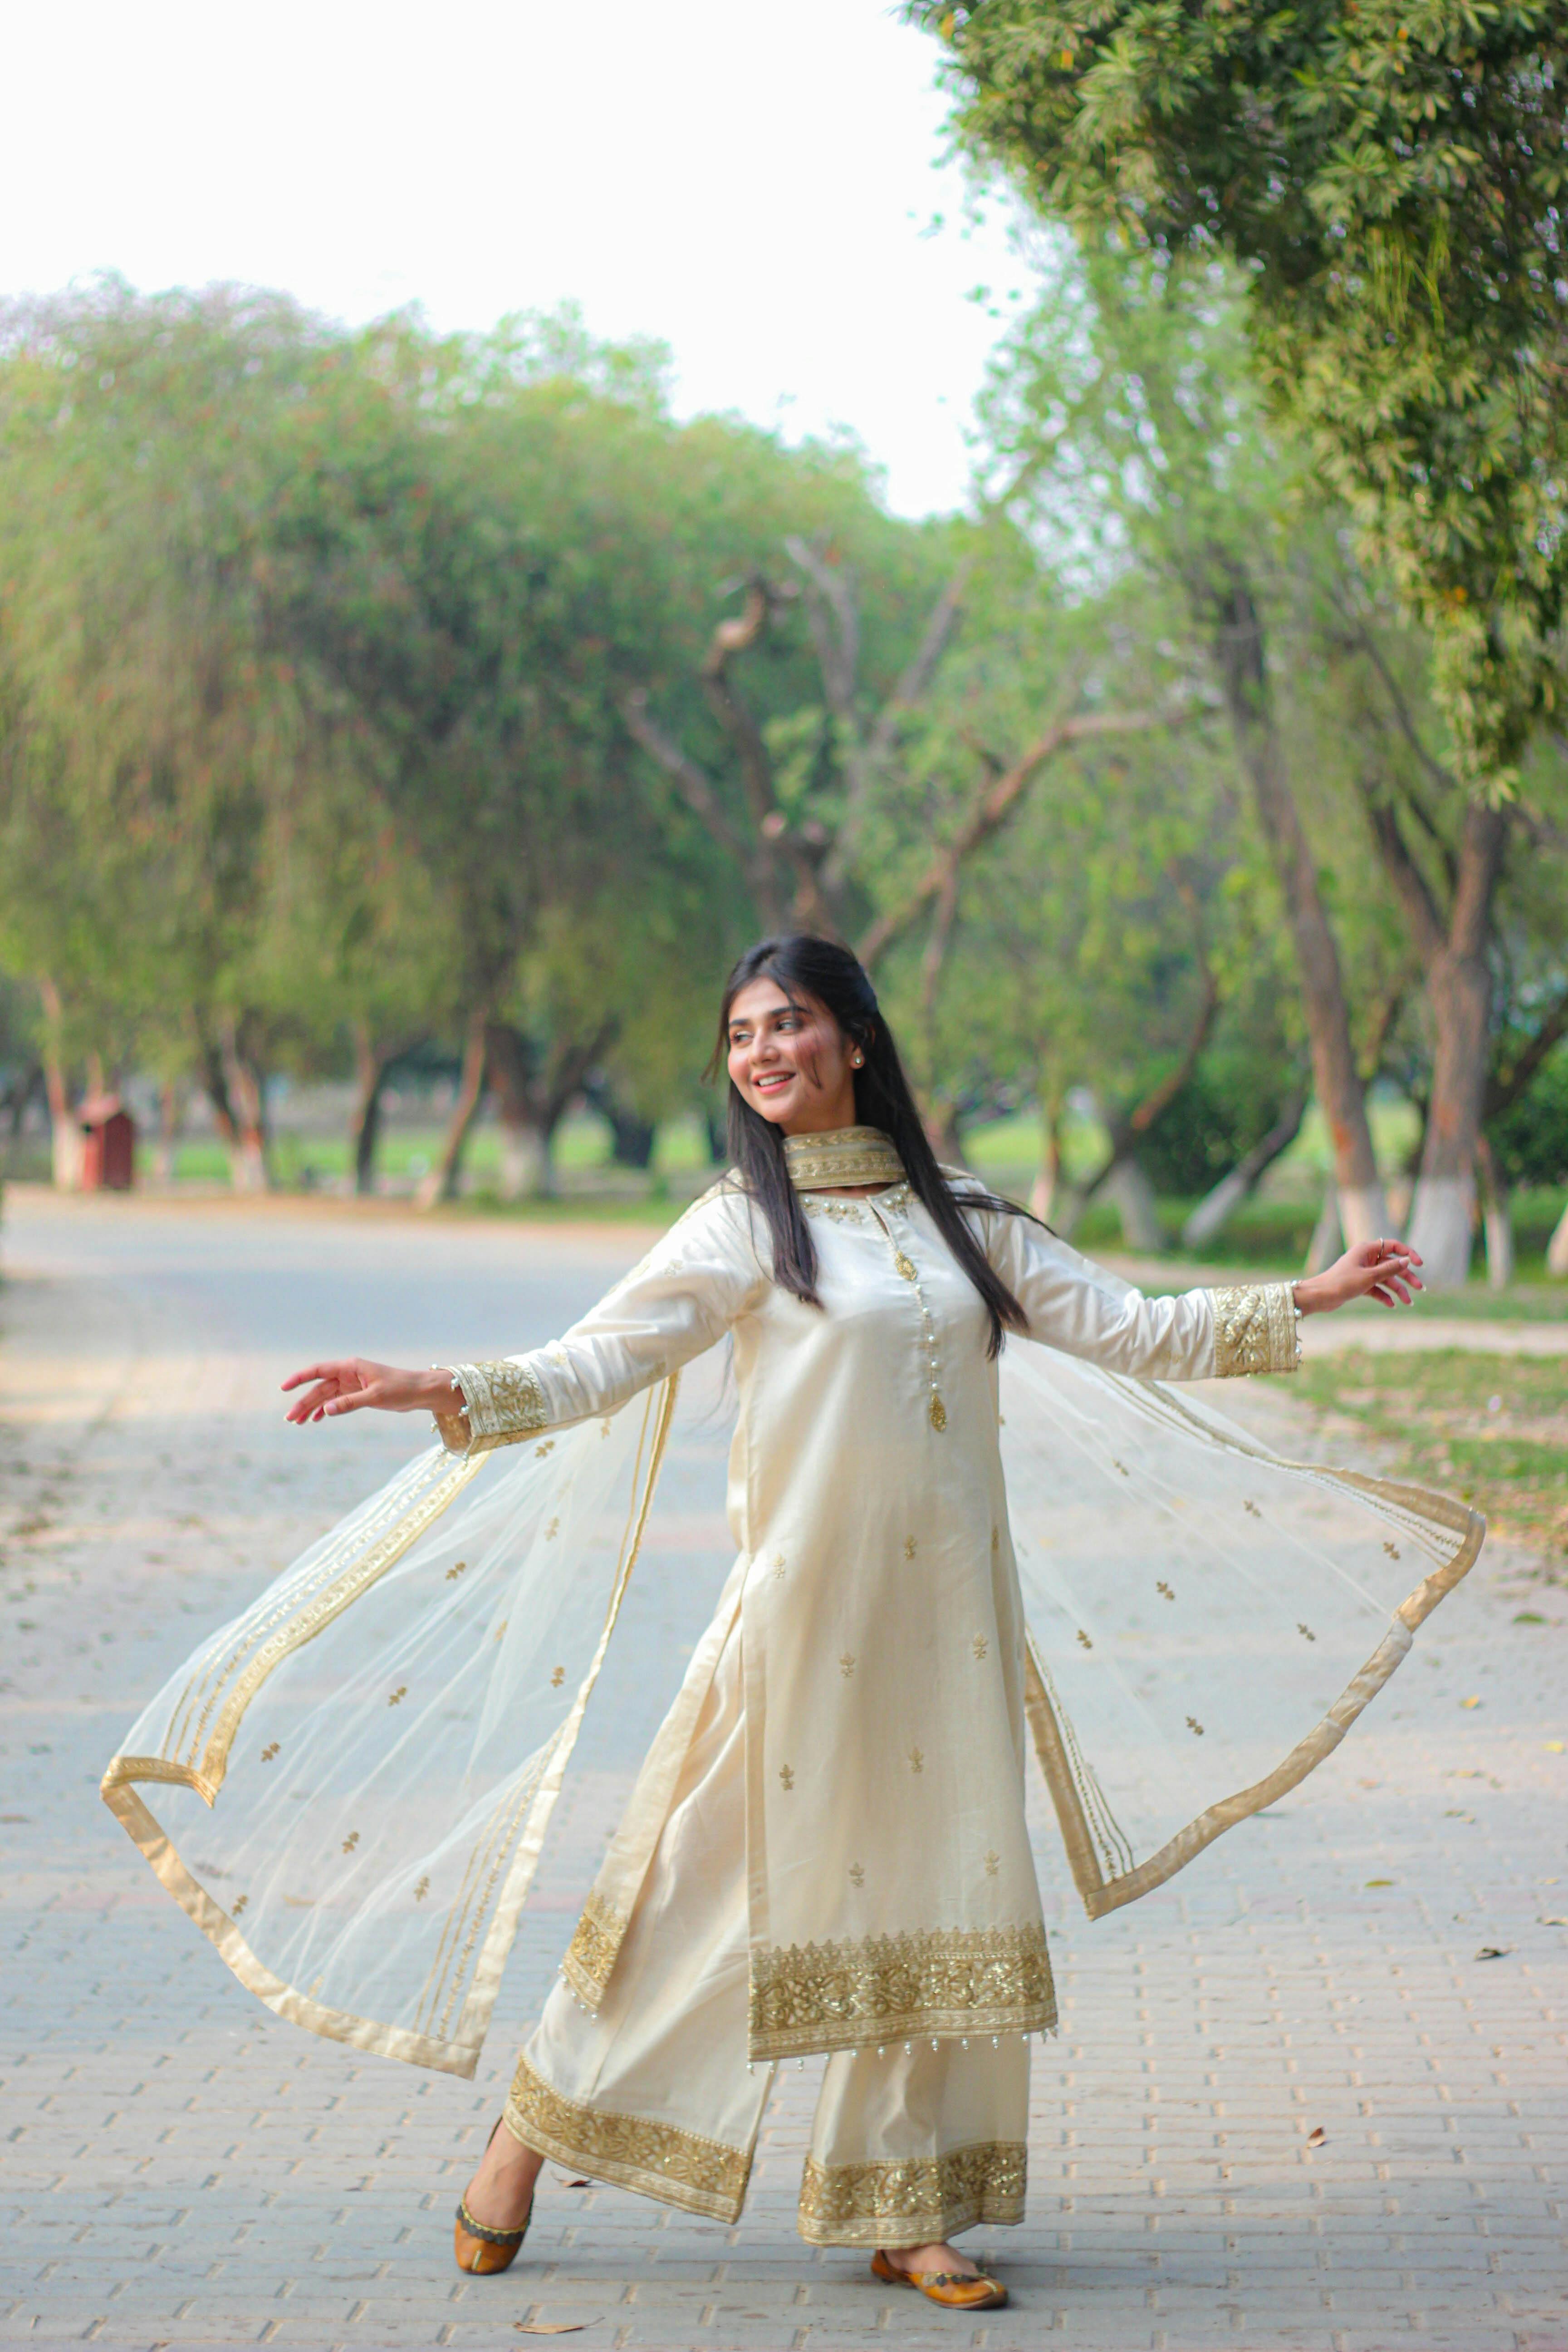 375 Likes, 2 Comments - punjabi suits (@patialashahisuits) on Instagram:  “Follow my page @only.suit … | Pakistani fancy dresses, Girls fashion  clothes, Suit designs